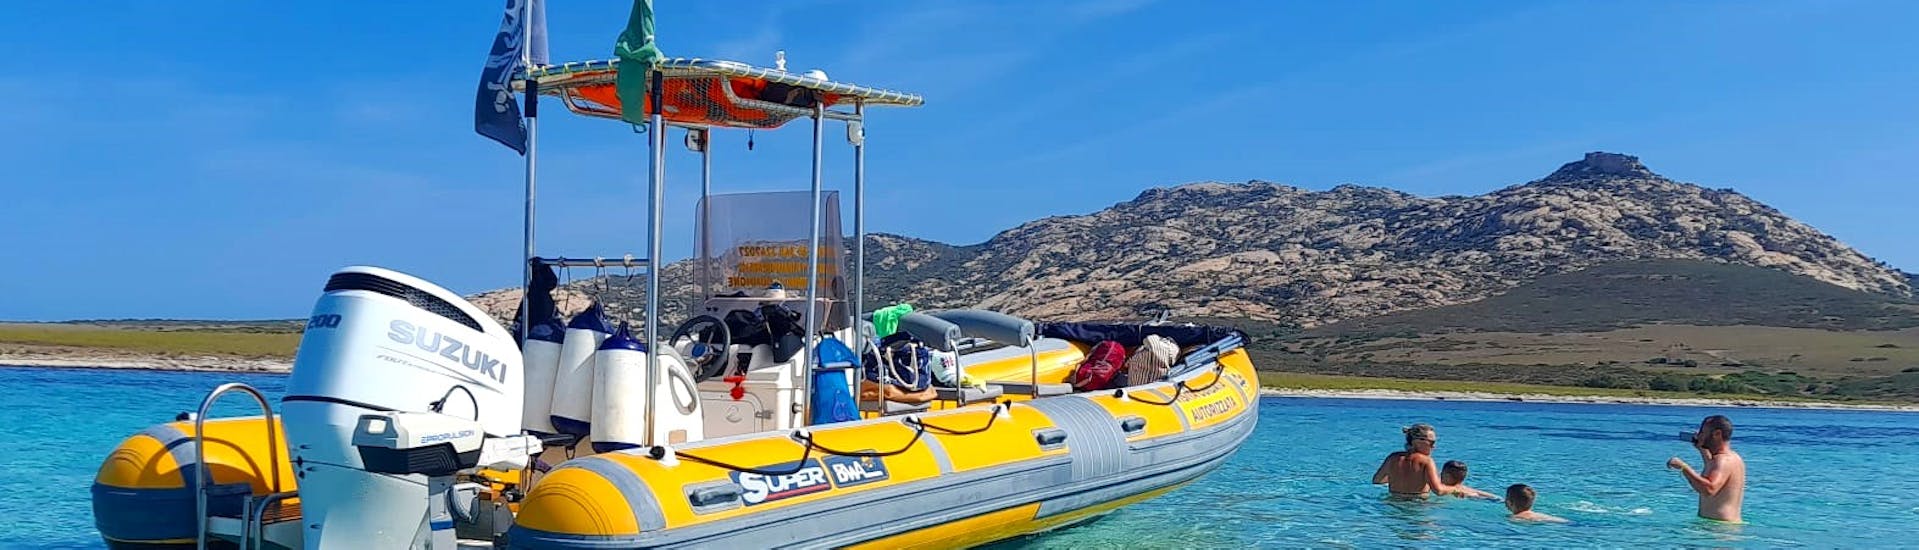 Balade en bateau Stintino - Parc national de l'Asinara.